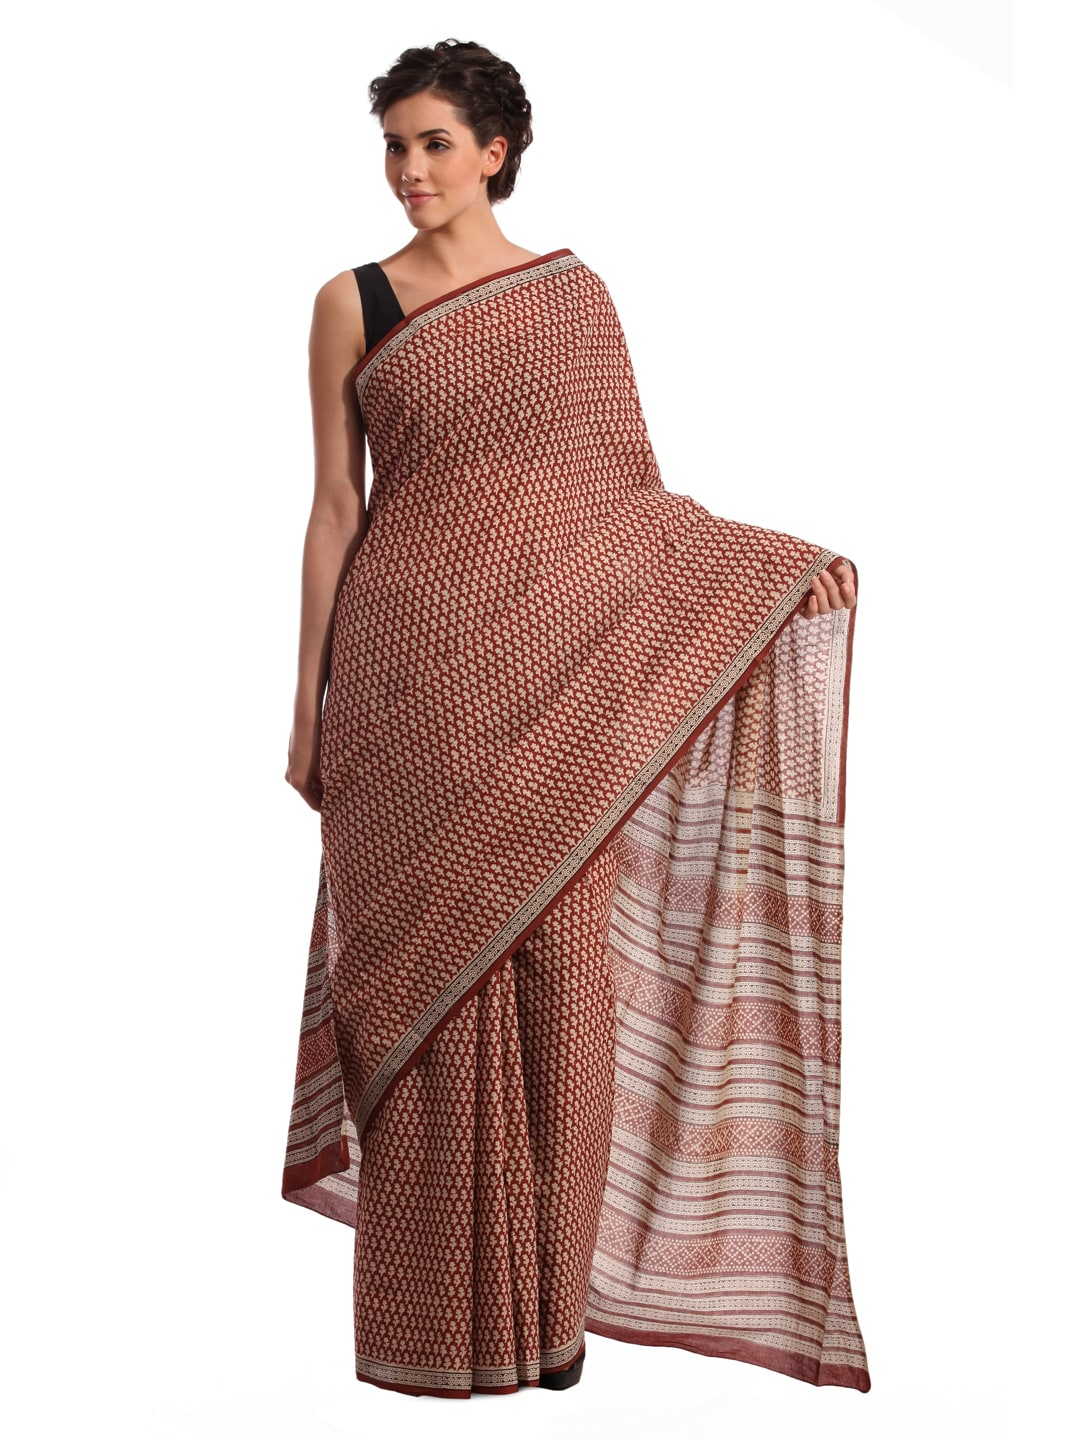 Fabindia Red Jaipur Print Cotton Sari